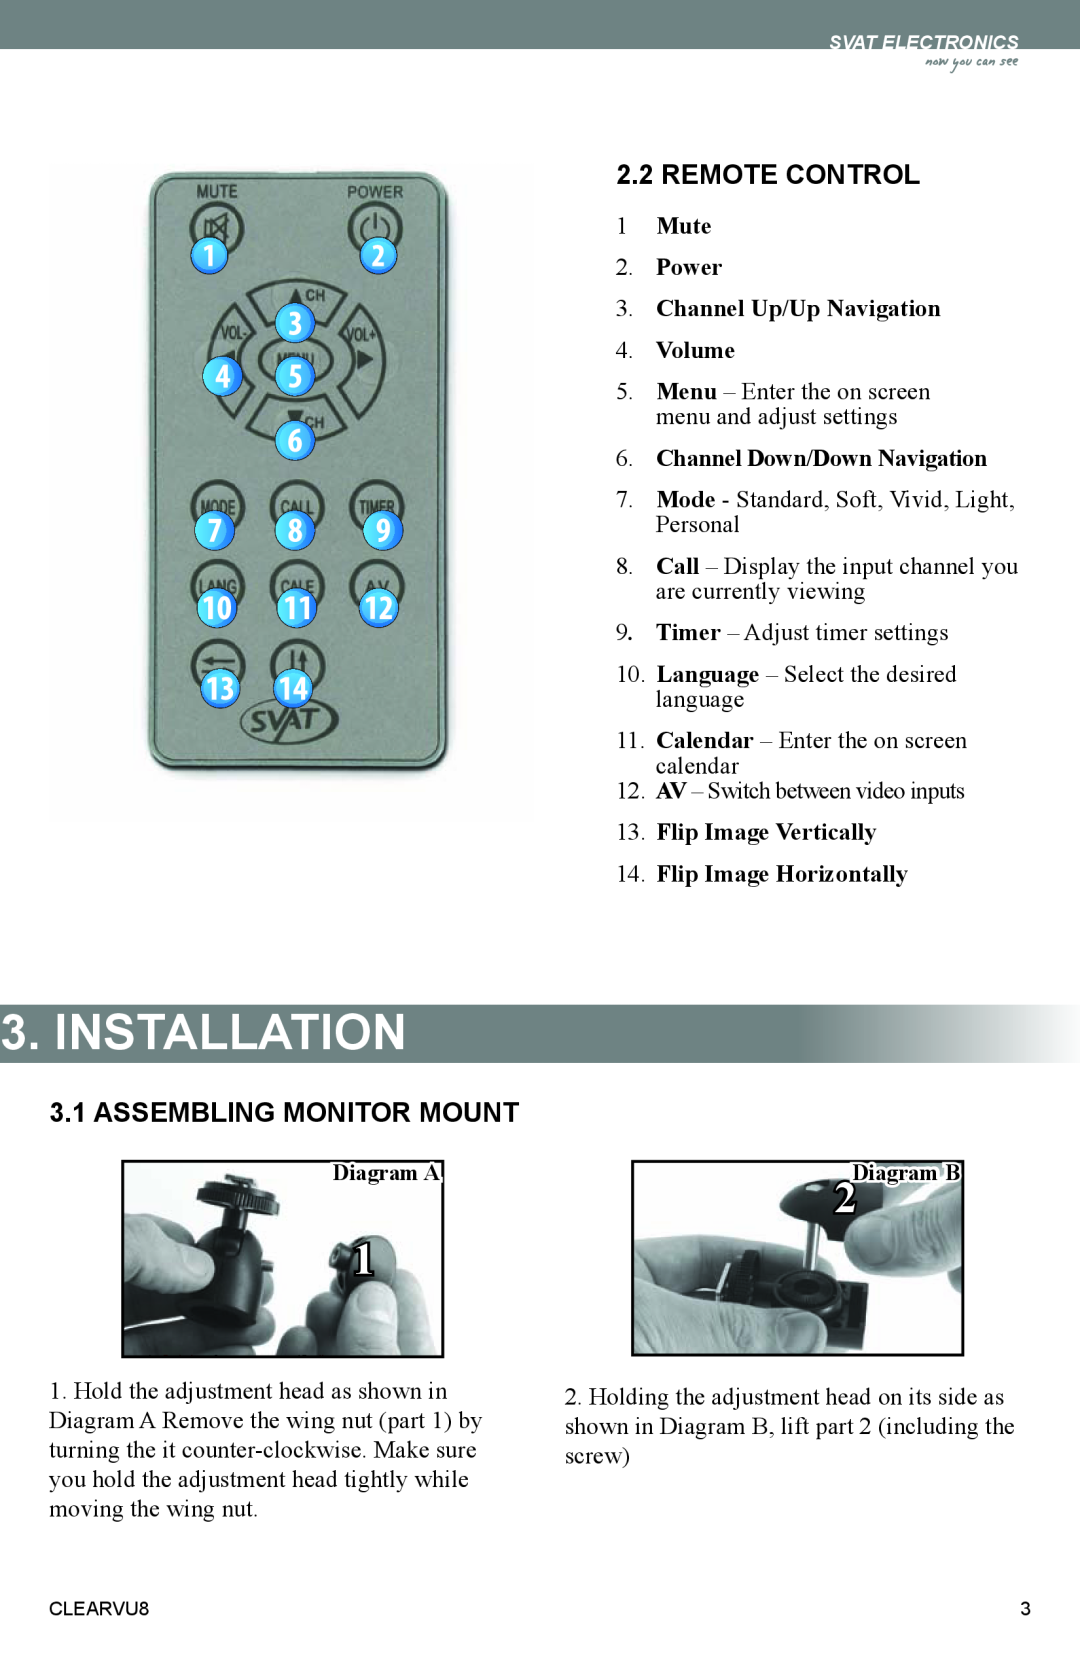 SVAT Electronics CLEARVU8 instruction manual Installation, Remote Control, Assembling Monitor Mount 